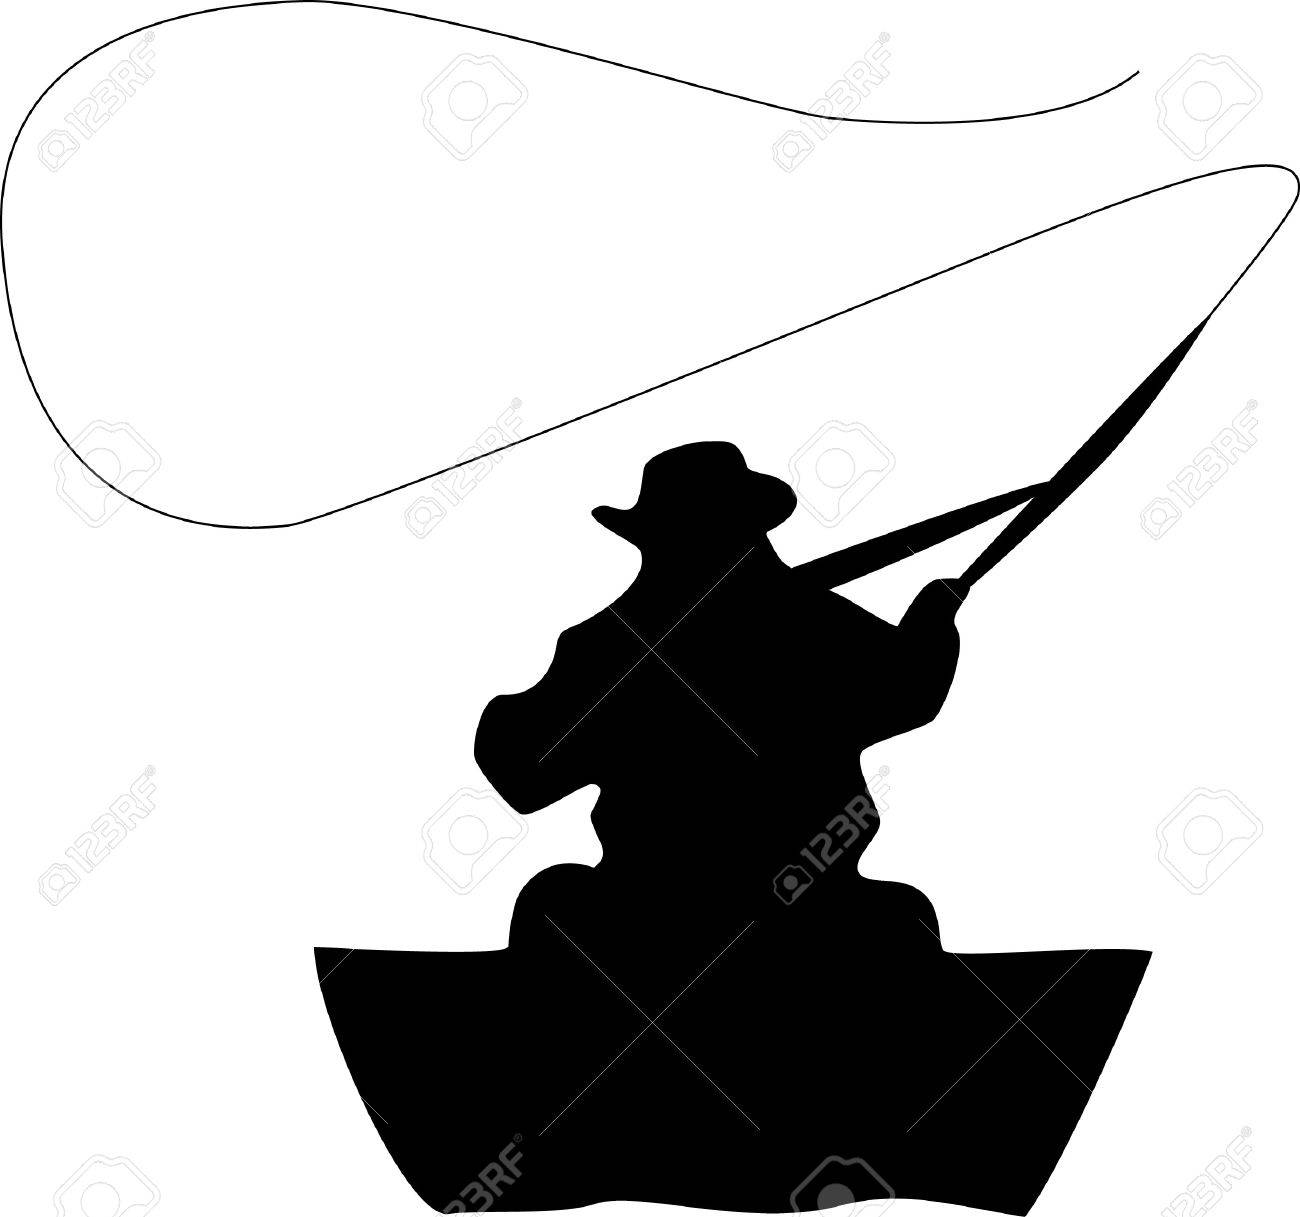 fisherman-in-a-boat-Stock-Vector-fishing-silhouette-fisherman.jpg